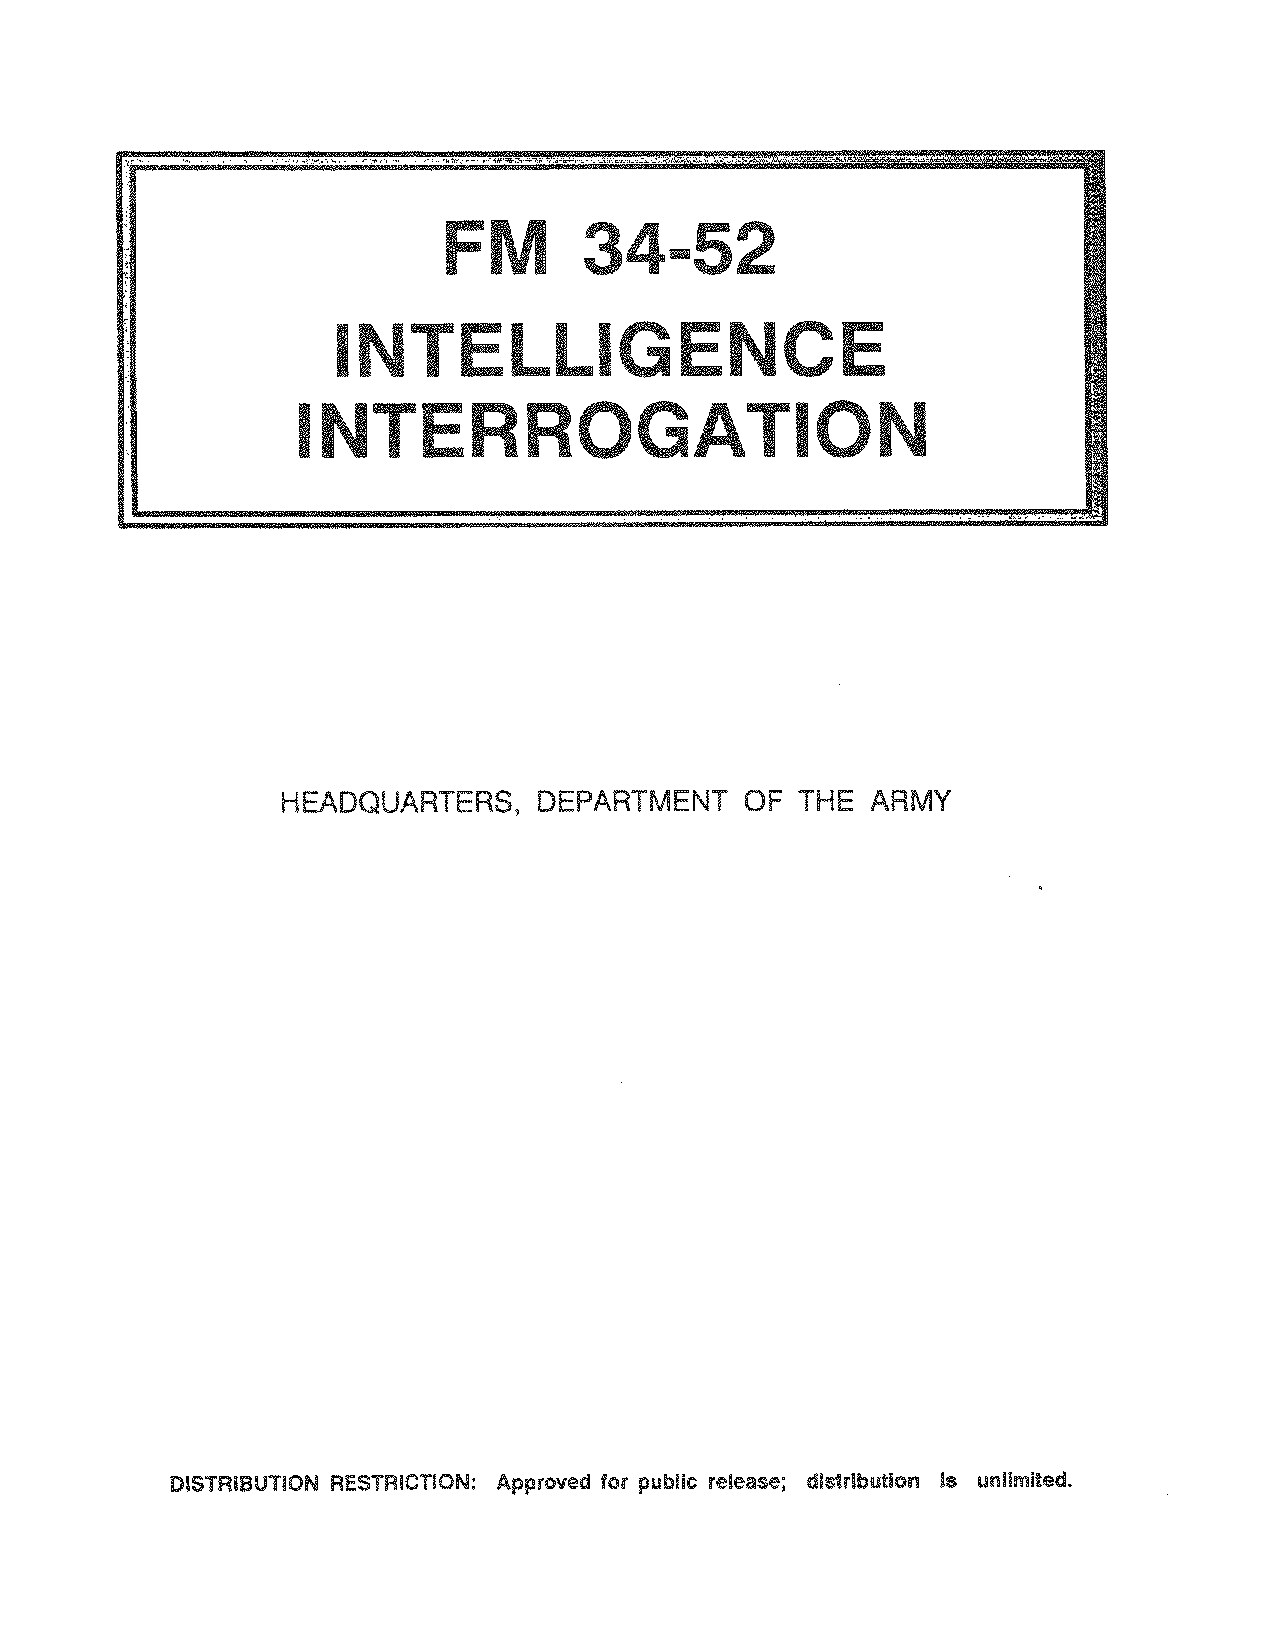 FM 34-52 Intelligence Interrogation